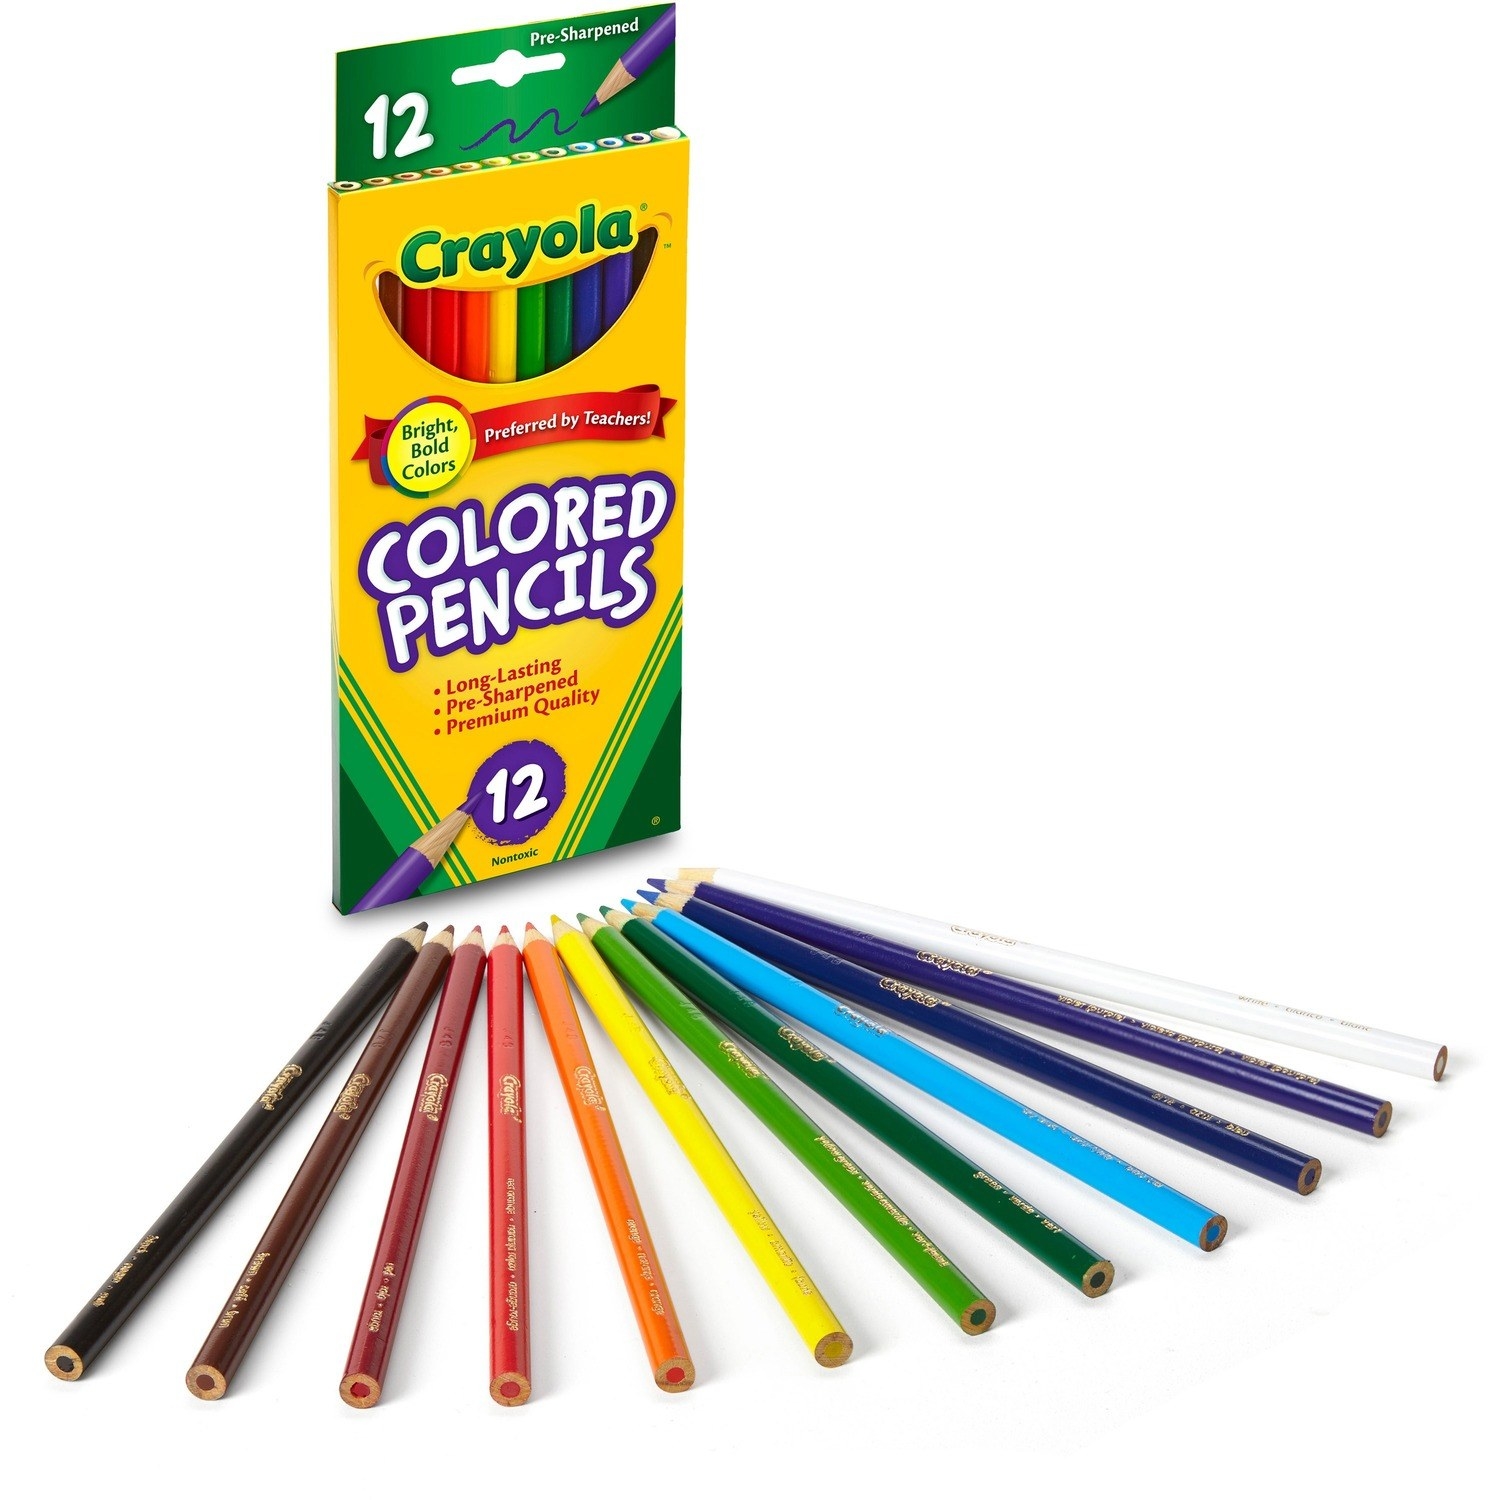 12 count of crayola colored pencils